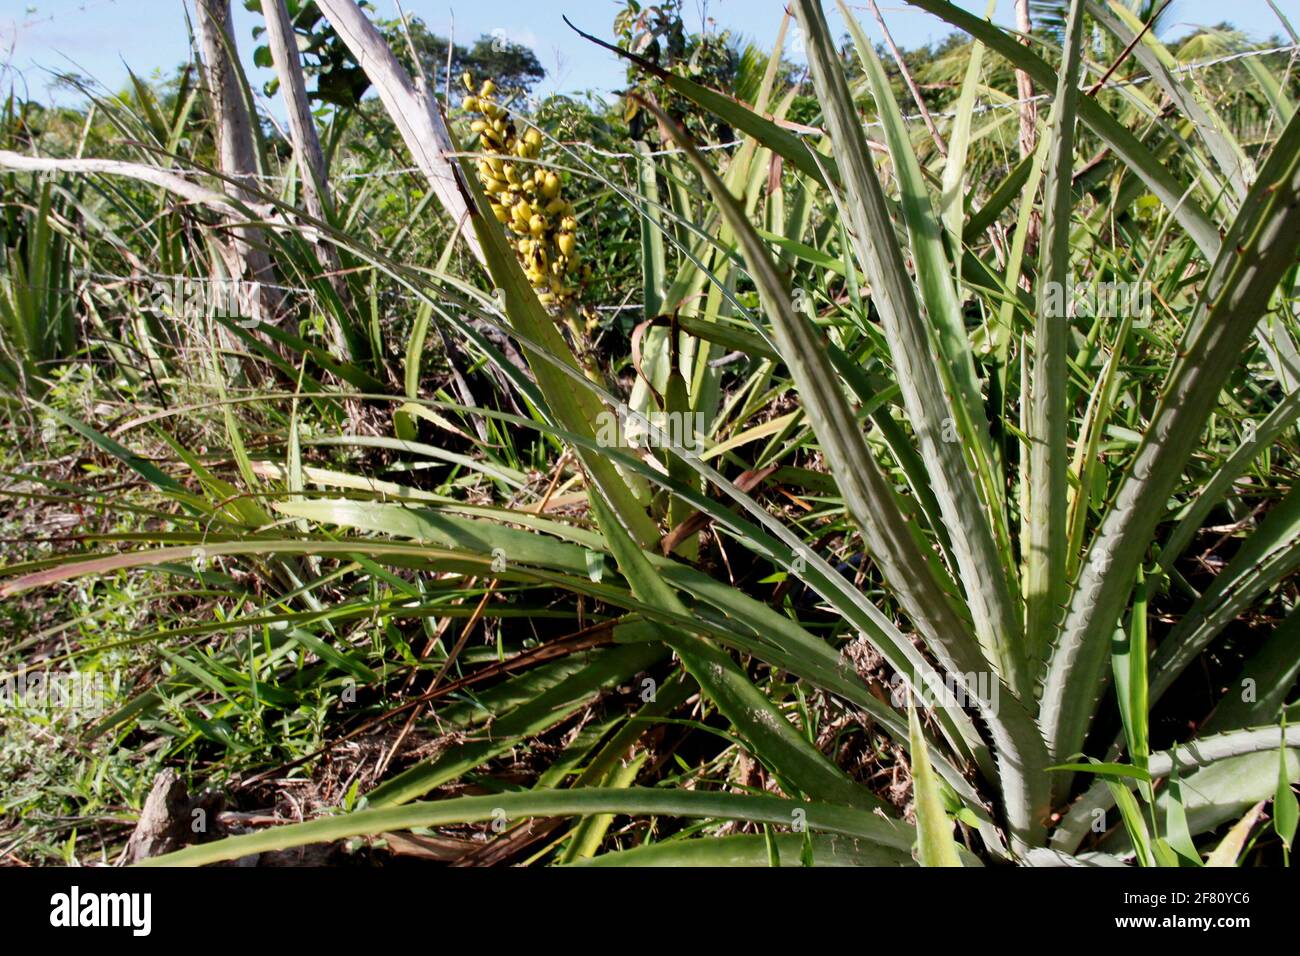 conde, bahia / brazil - june 14,2013: bromelia macambira, plant that pusssui espeinho is seen in the city of Conde. *** Local Caption ***  . Stock Photo